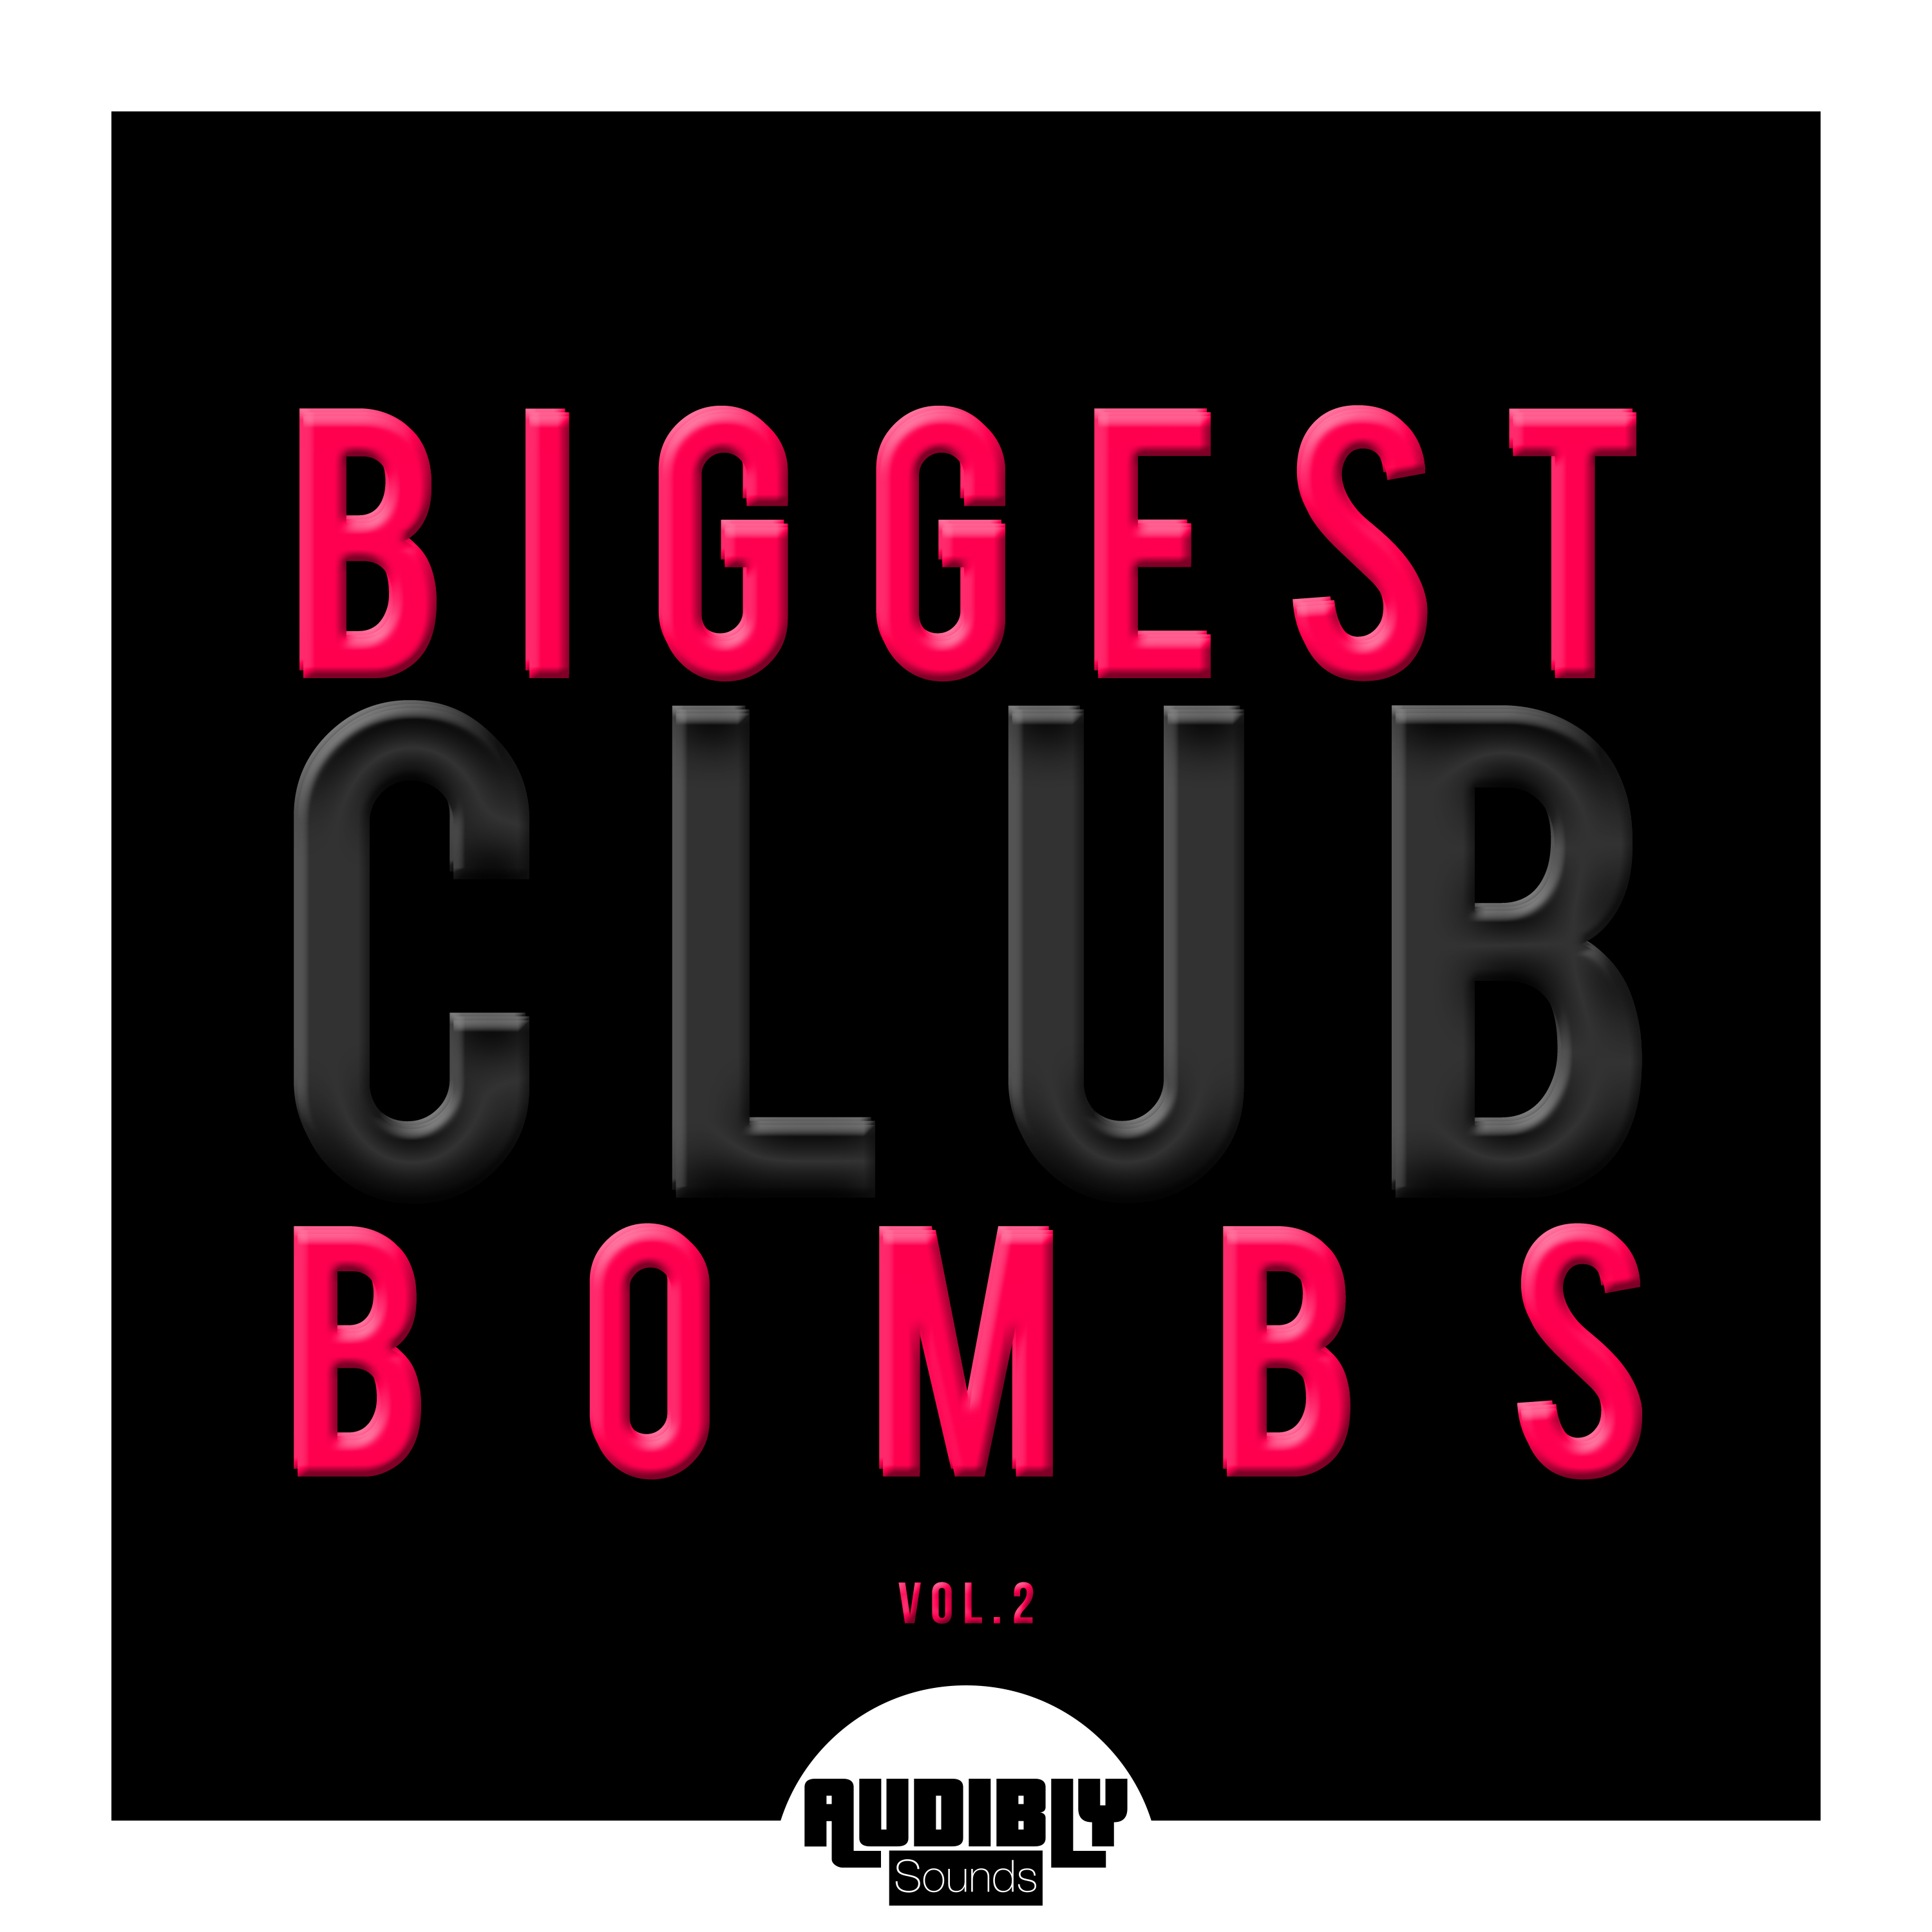 Biggest Club Bombs, Vol. 2